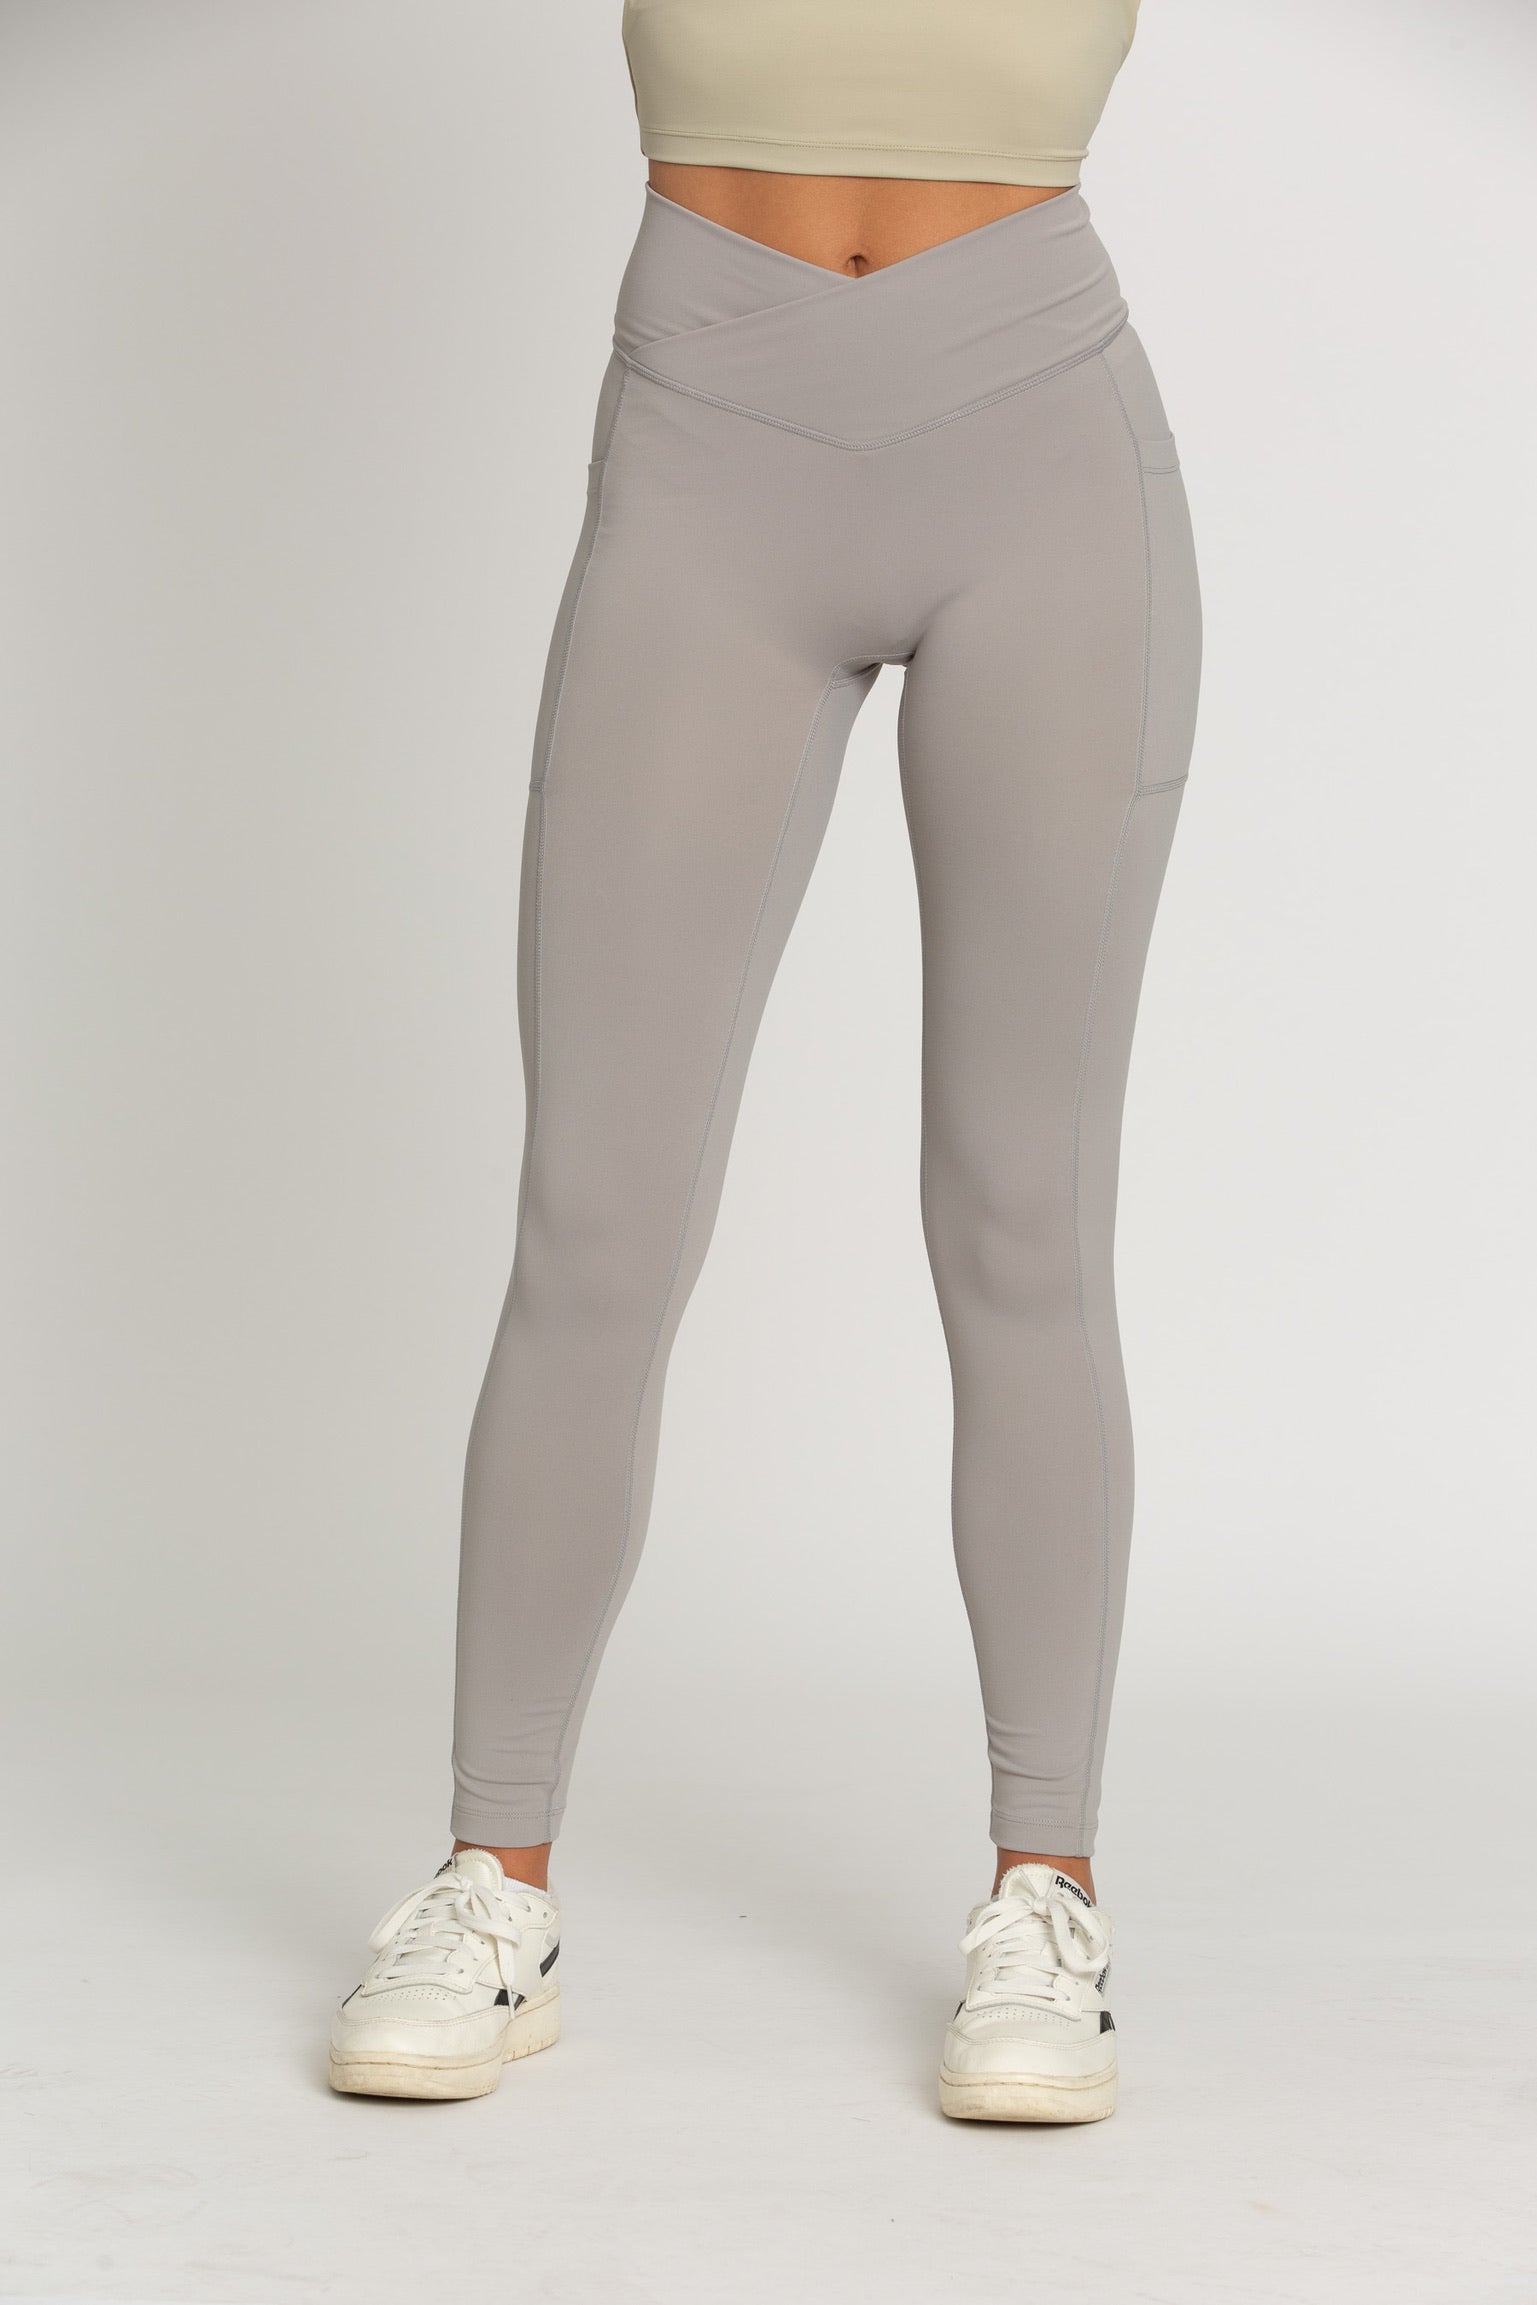 Buy we fleece Crossover Leggings for Women-Workout High Waisted